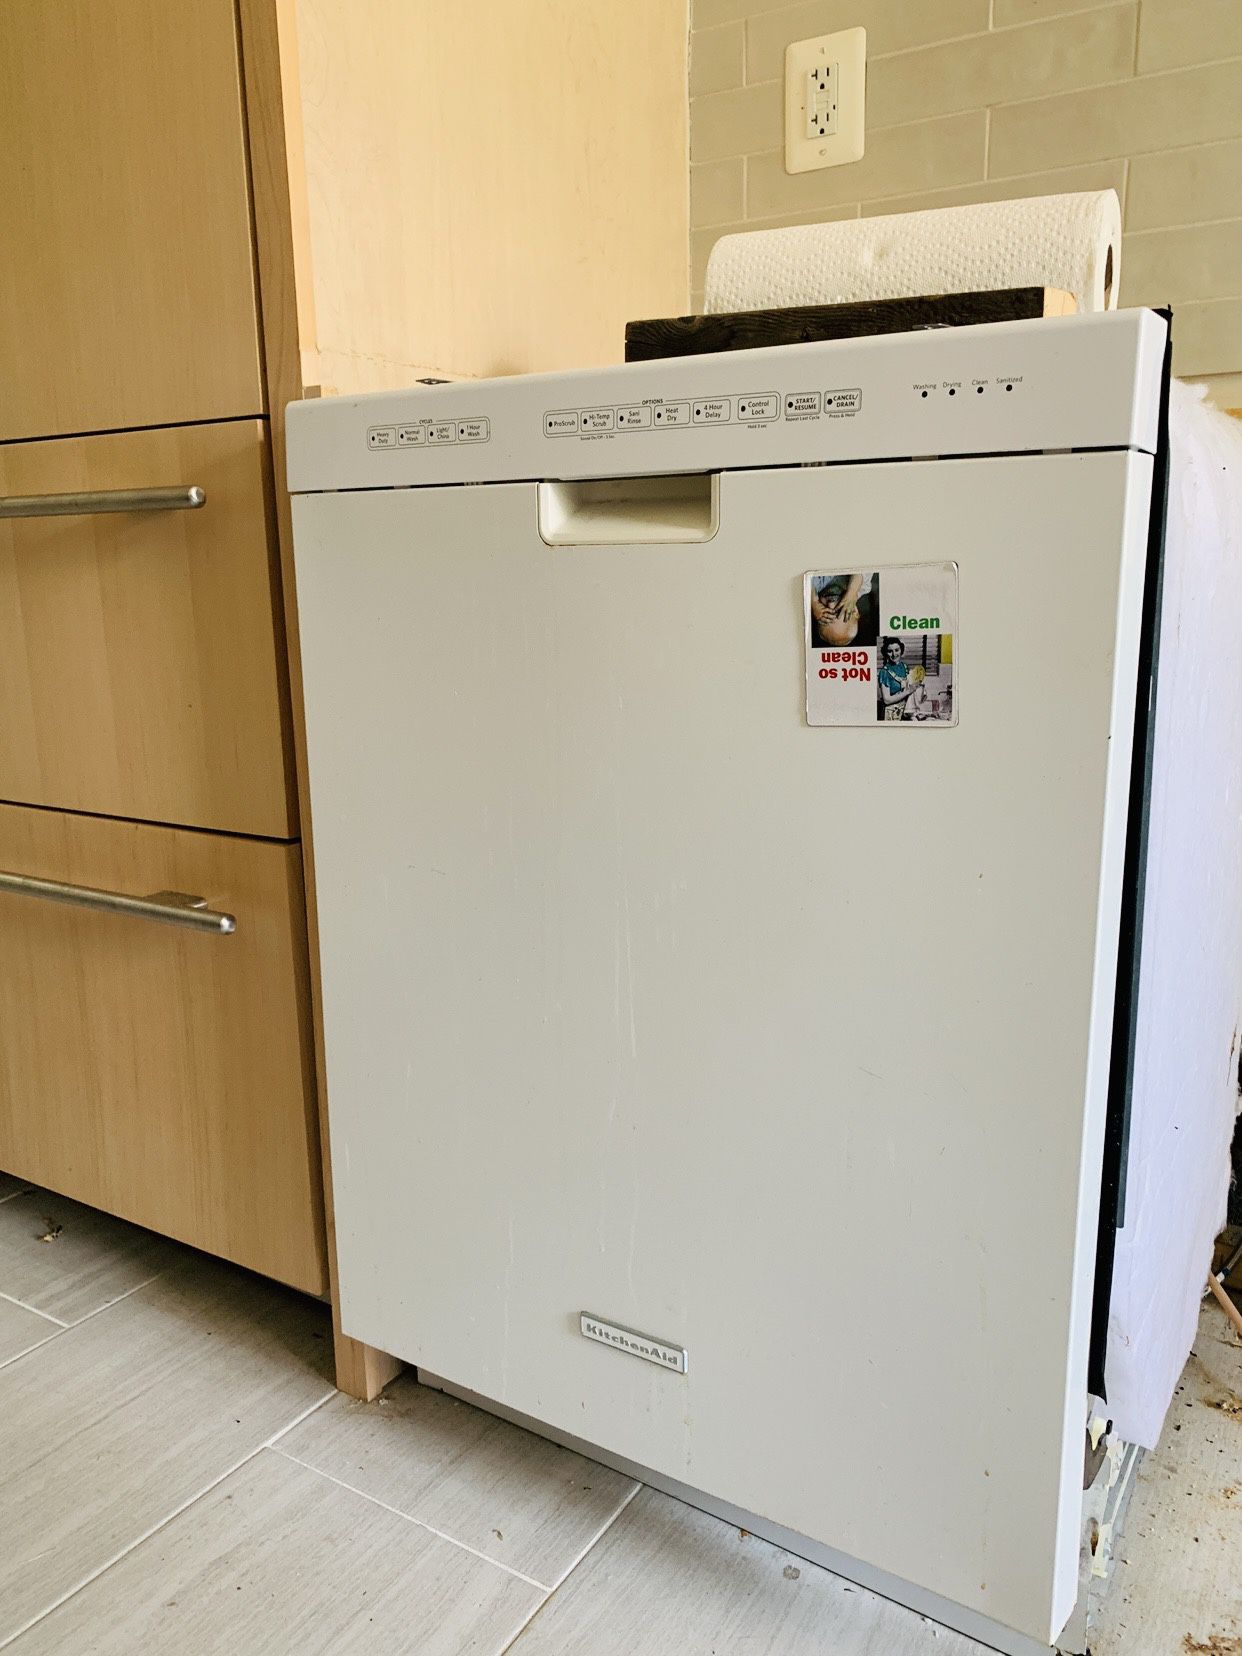 Dishwasher - Kitchen Aid